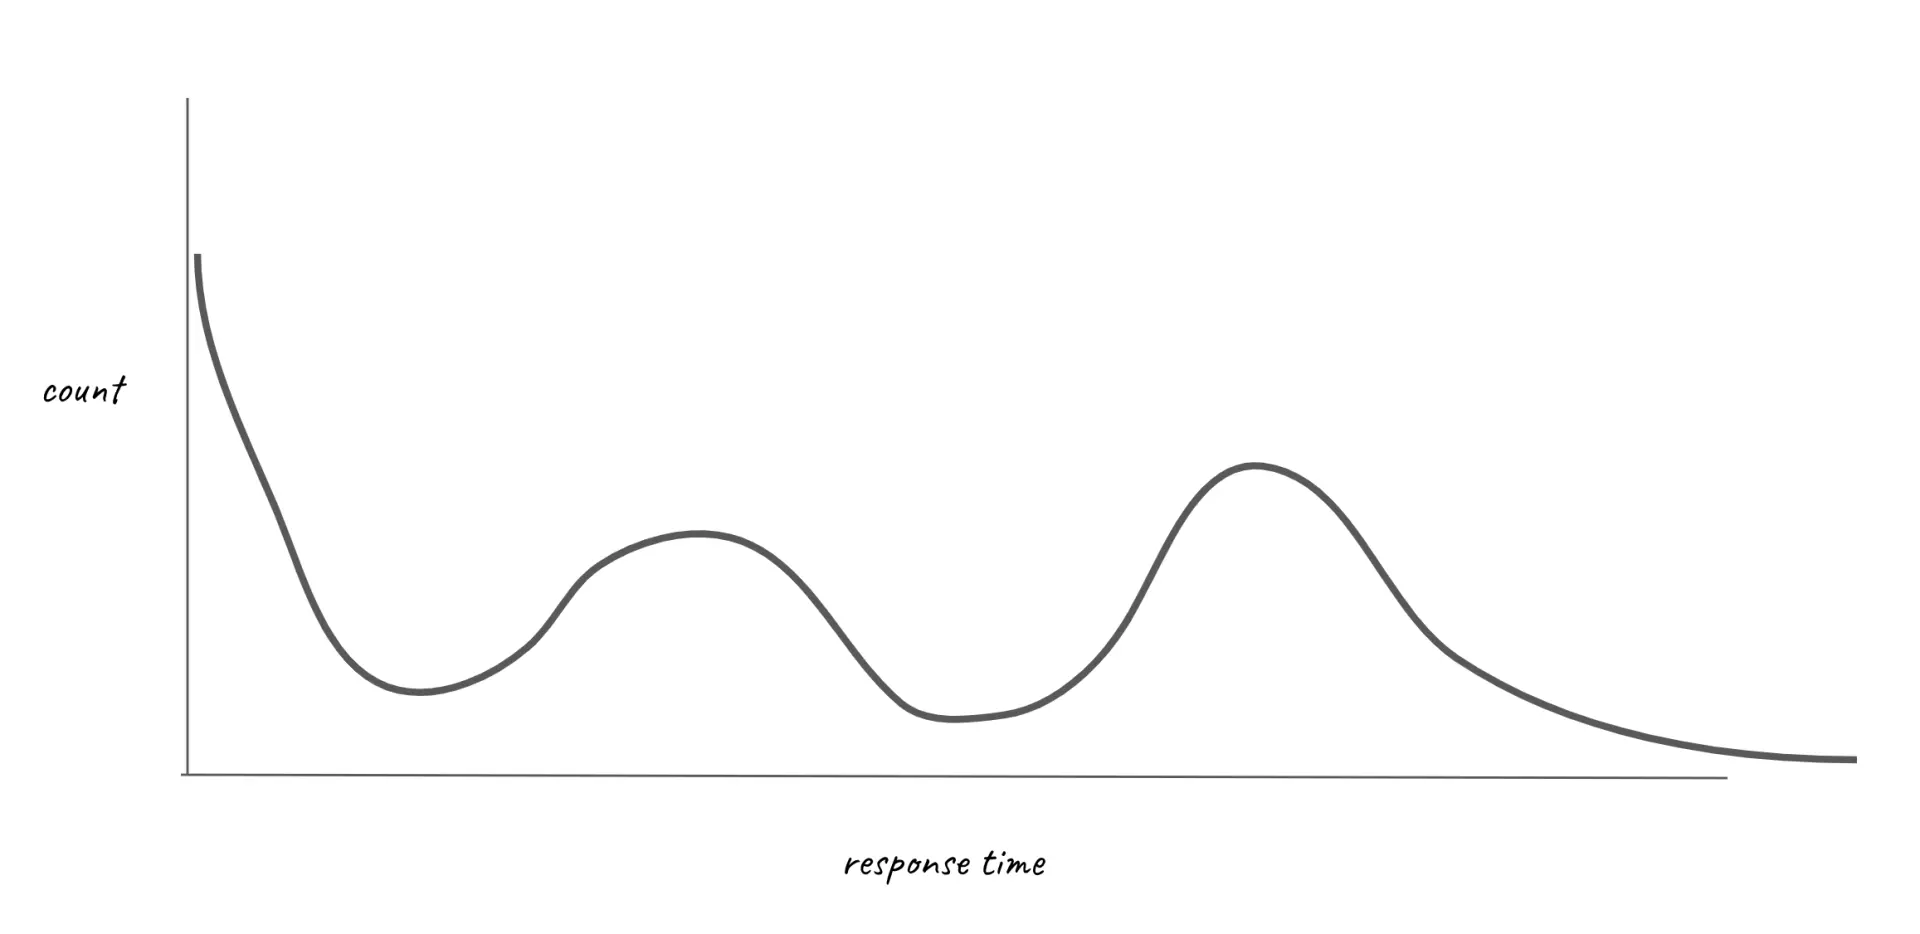 target probability distribution response time